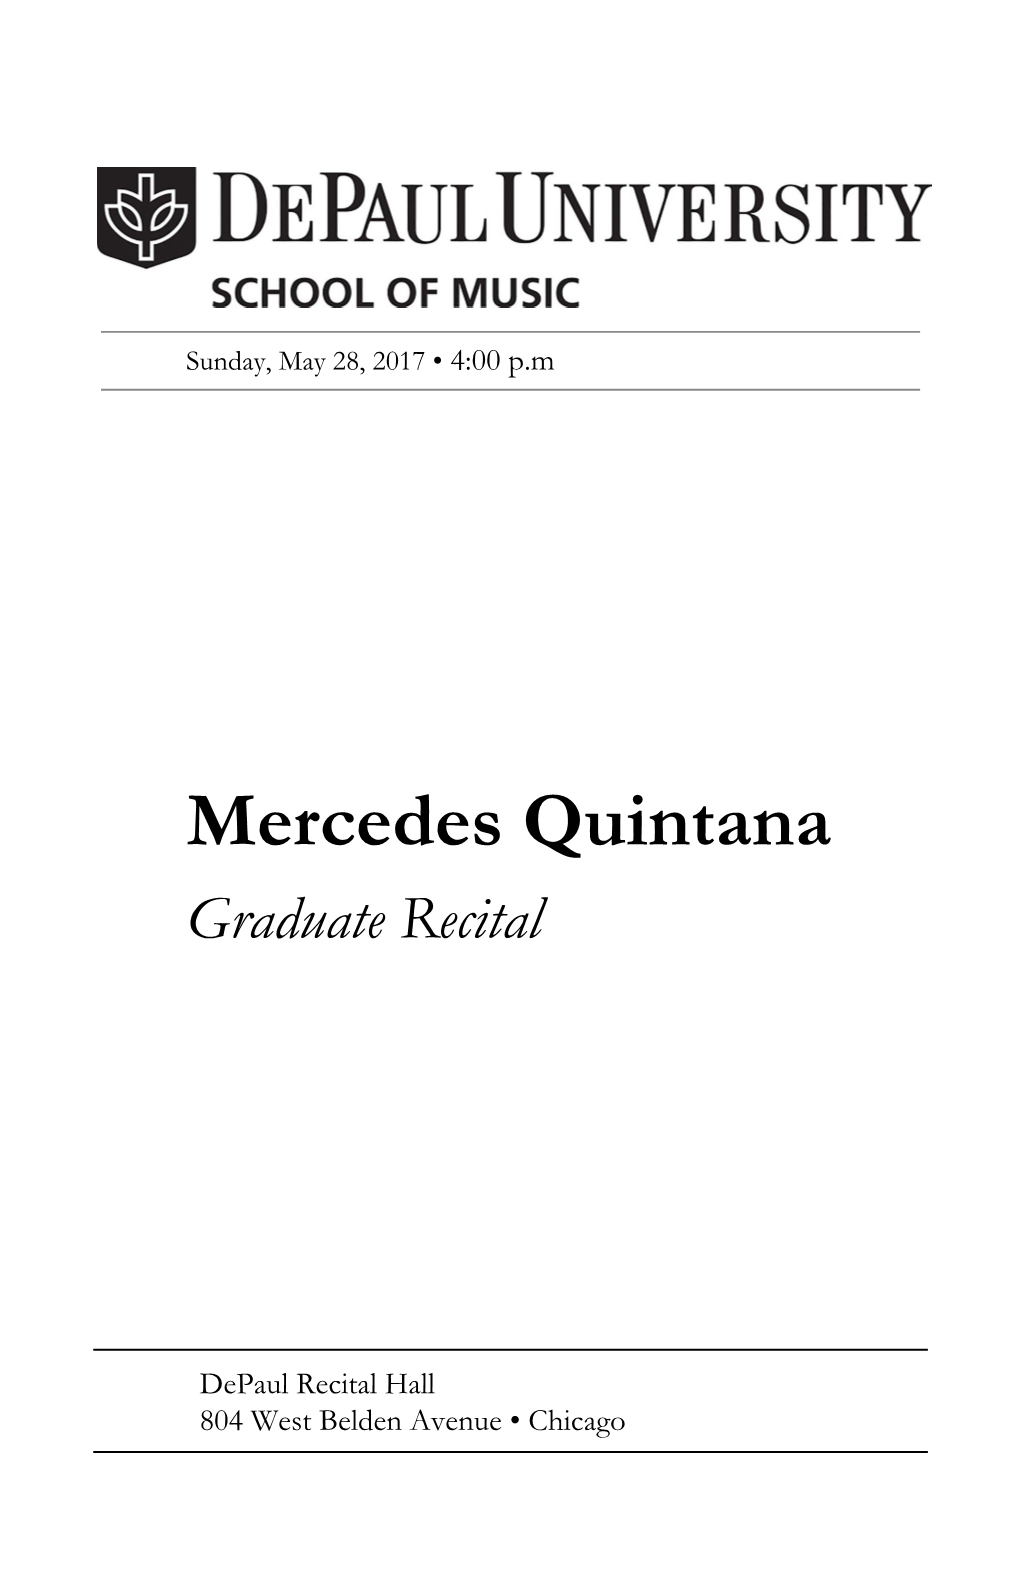 Mercedes Quintana, Viola Graduate Recital Yefim Romanov, Violin Luis Angel Salazar Avila, Violin Phillip Lee, Cello